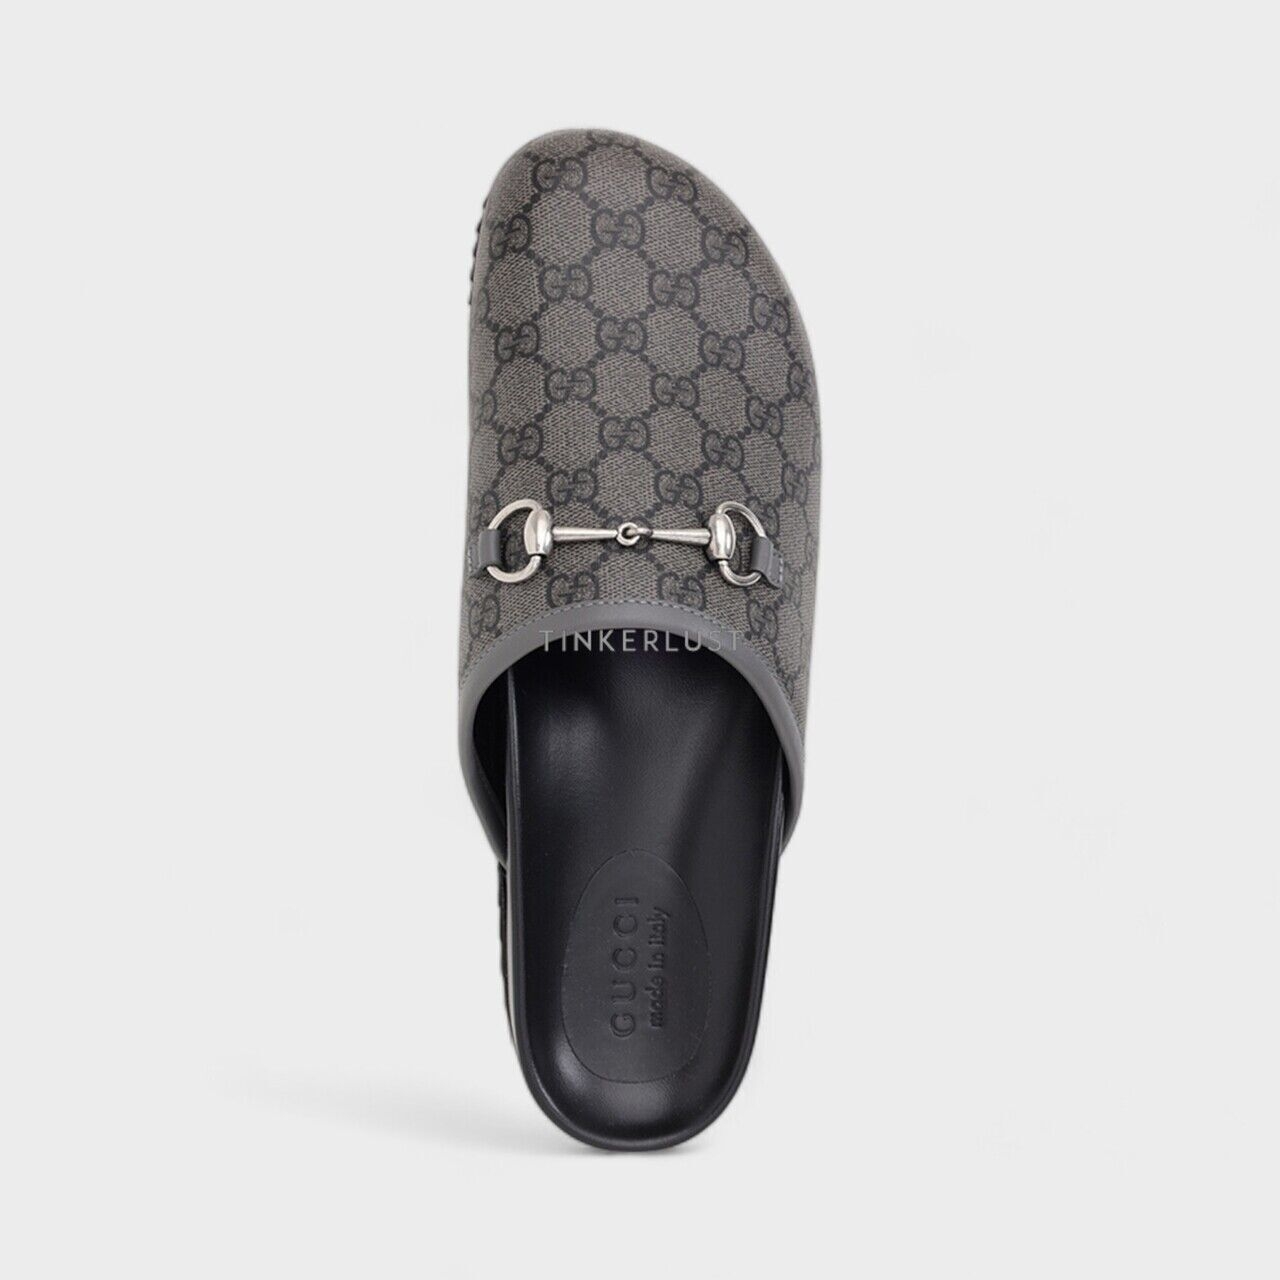 Gucci Men GG Supreme Mules in Grey/Black with Horsebit Sandals